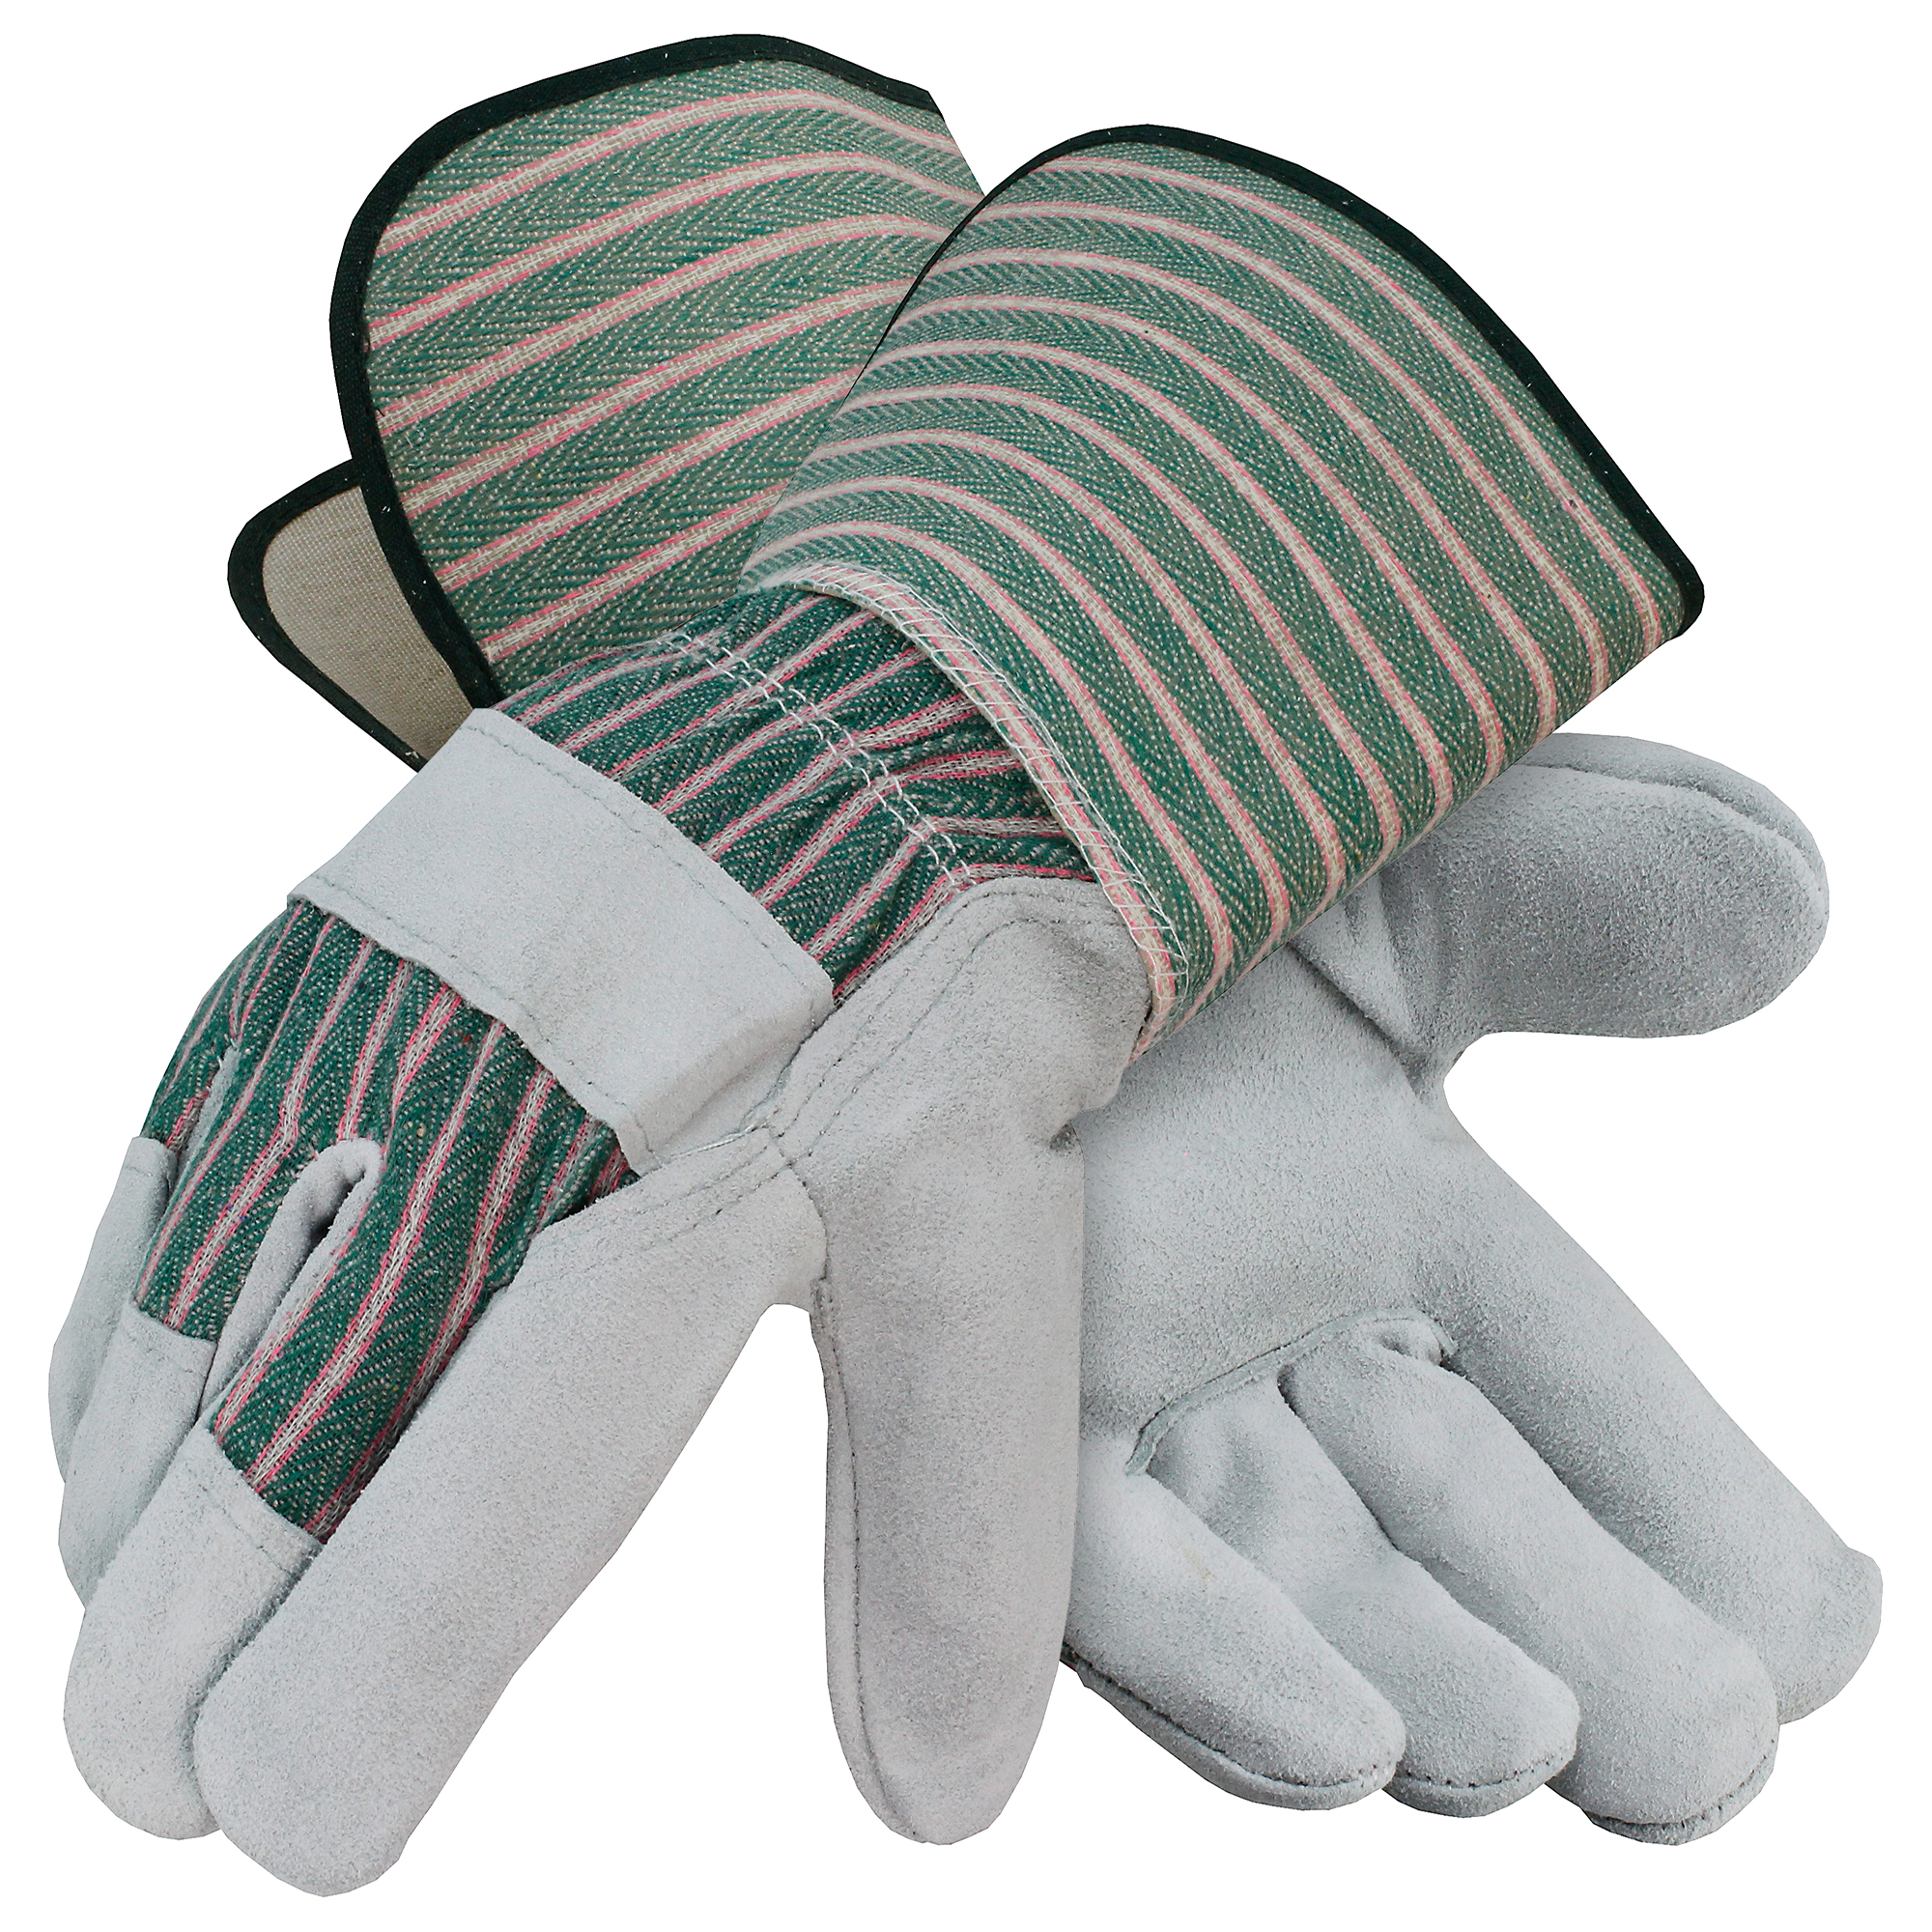 Leather Palm Gloves, Gauntlet Cuff